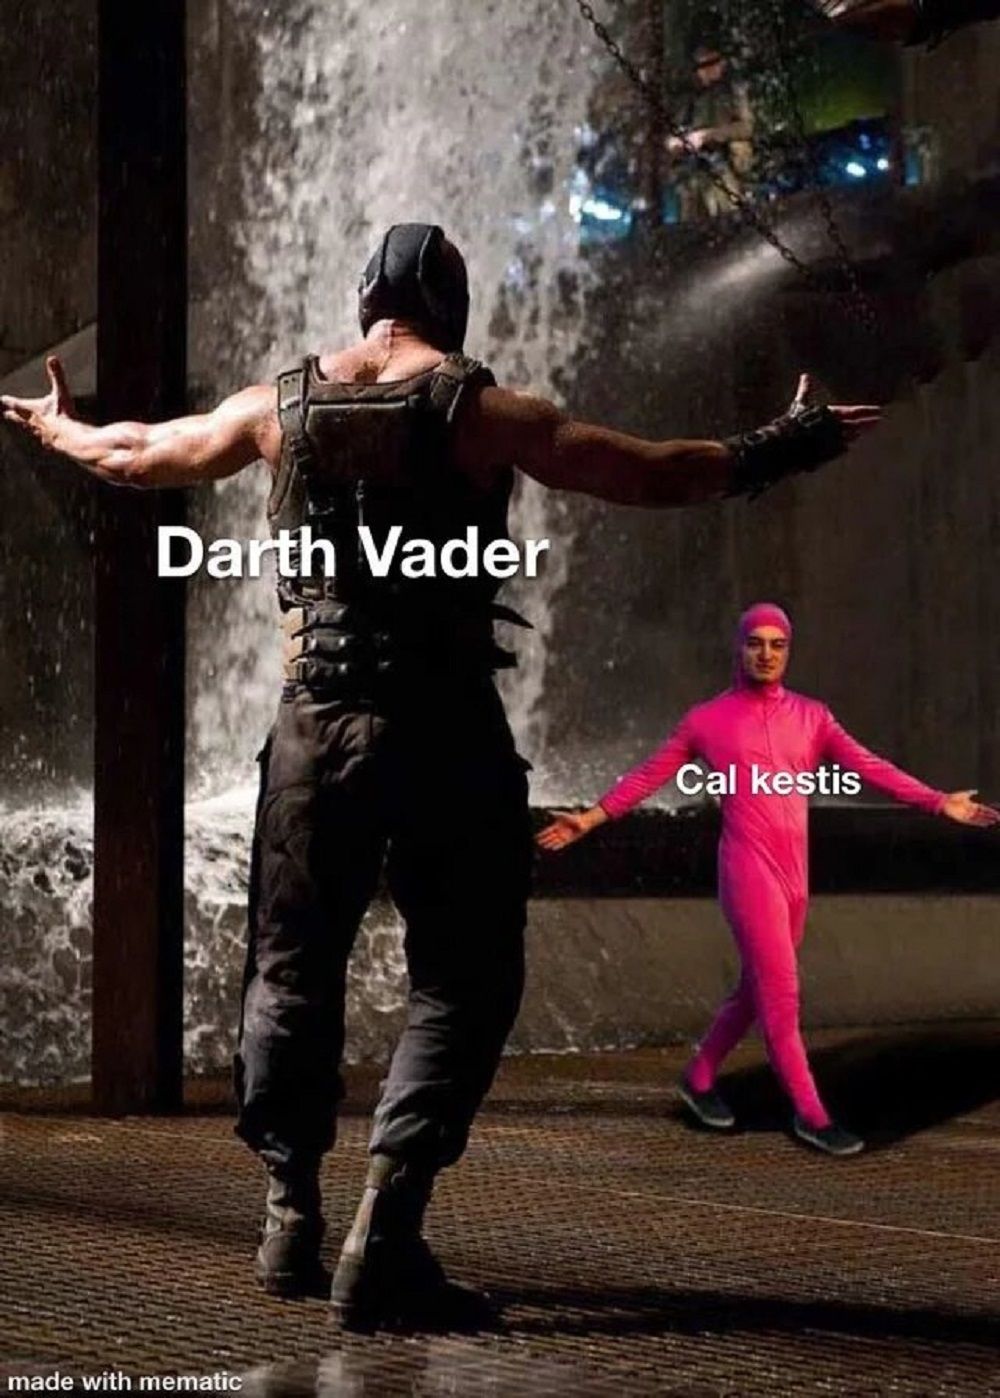 Cal Kestis Vs. Darth Vader meme 1 1